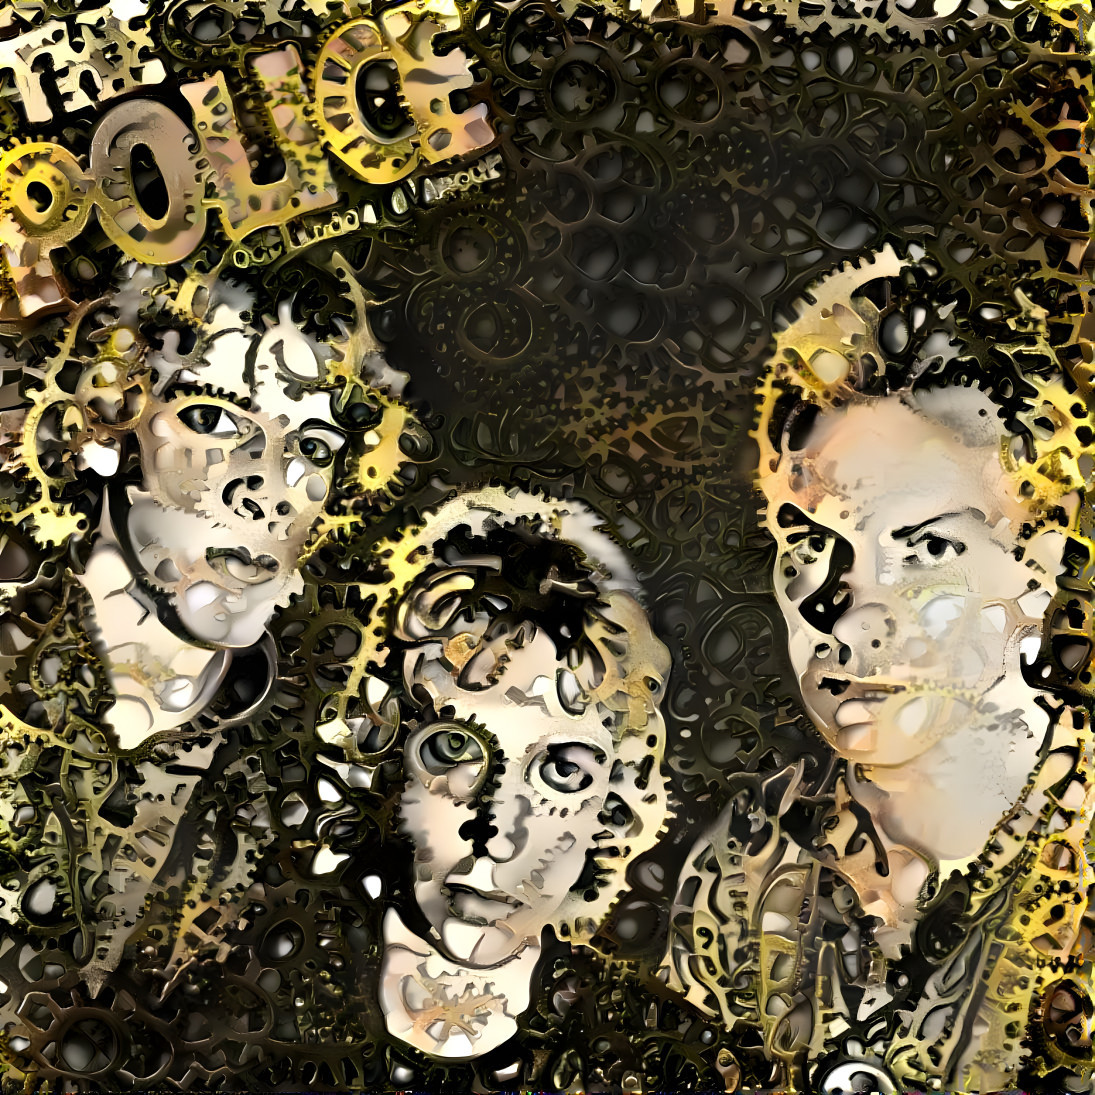 police album cover outlandos d'amour, gold gears